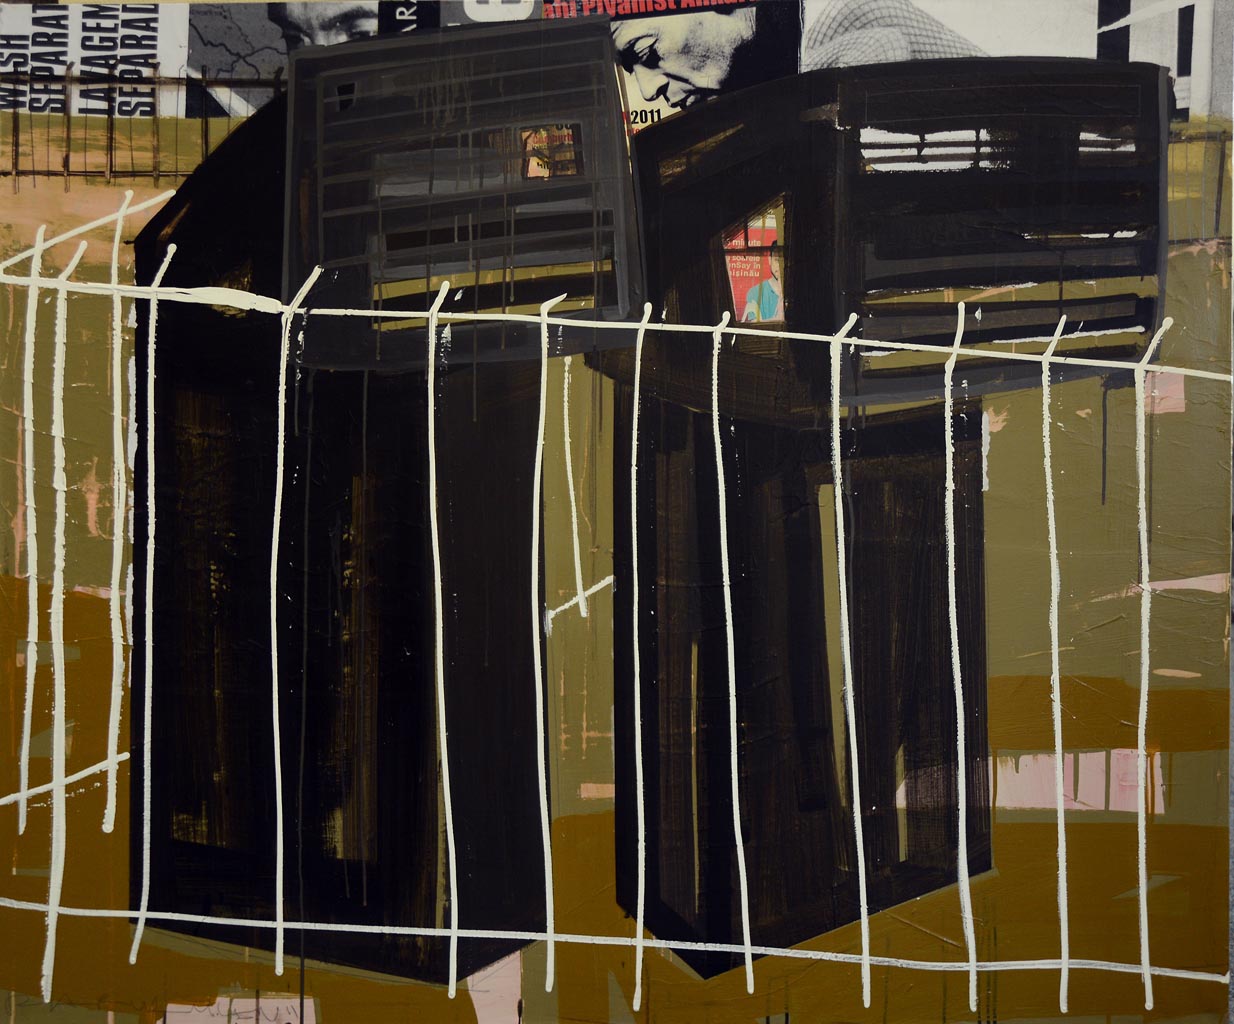 İsimsiz-Untitled, 2011, Tuval üzerine karışık teknik- Mixed media on canvas, 116x140 cm.